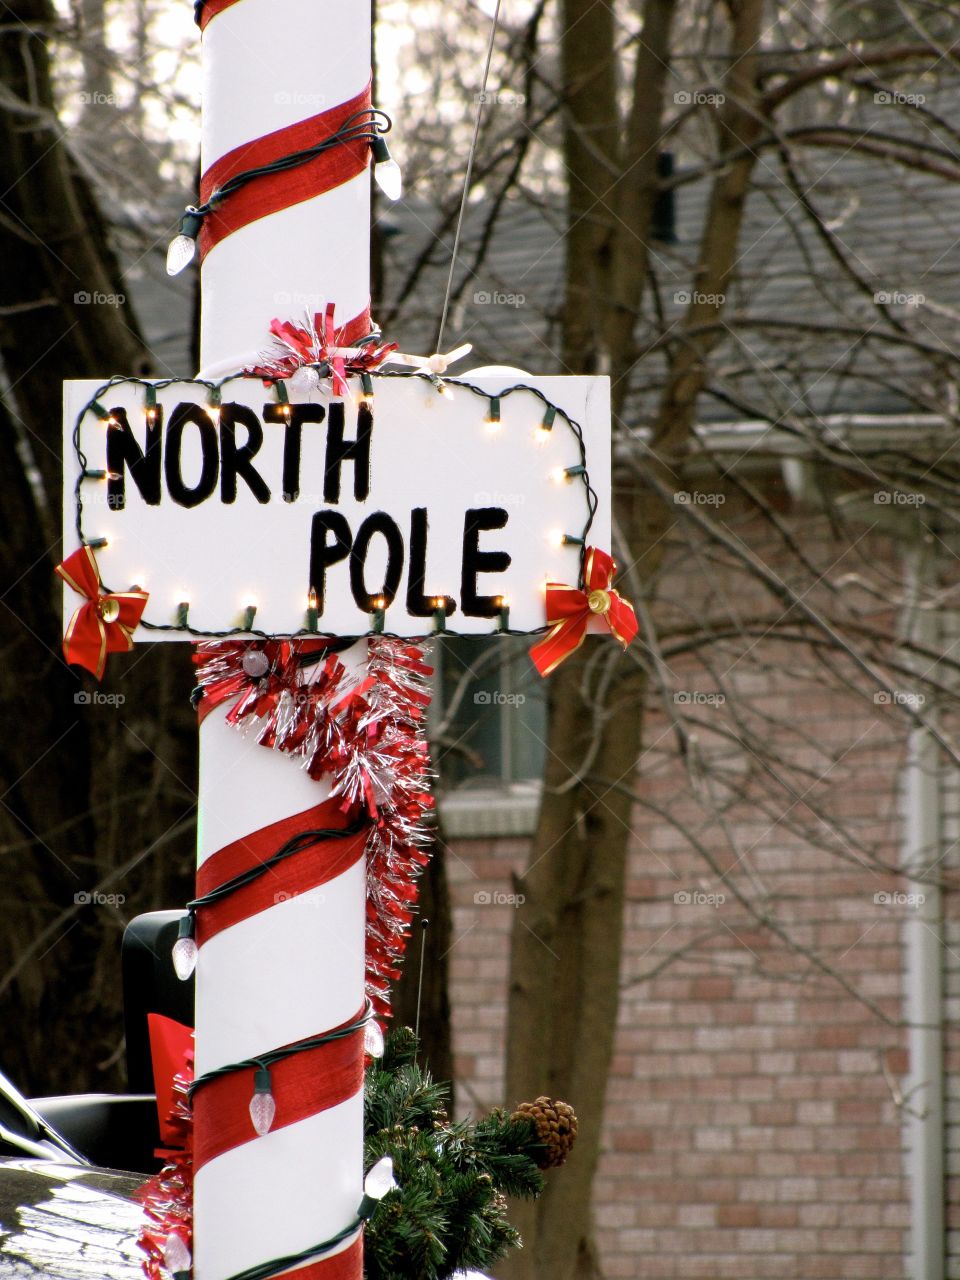 The North Pole! 